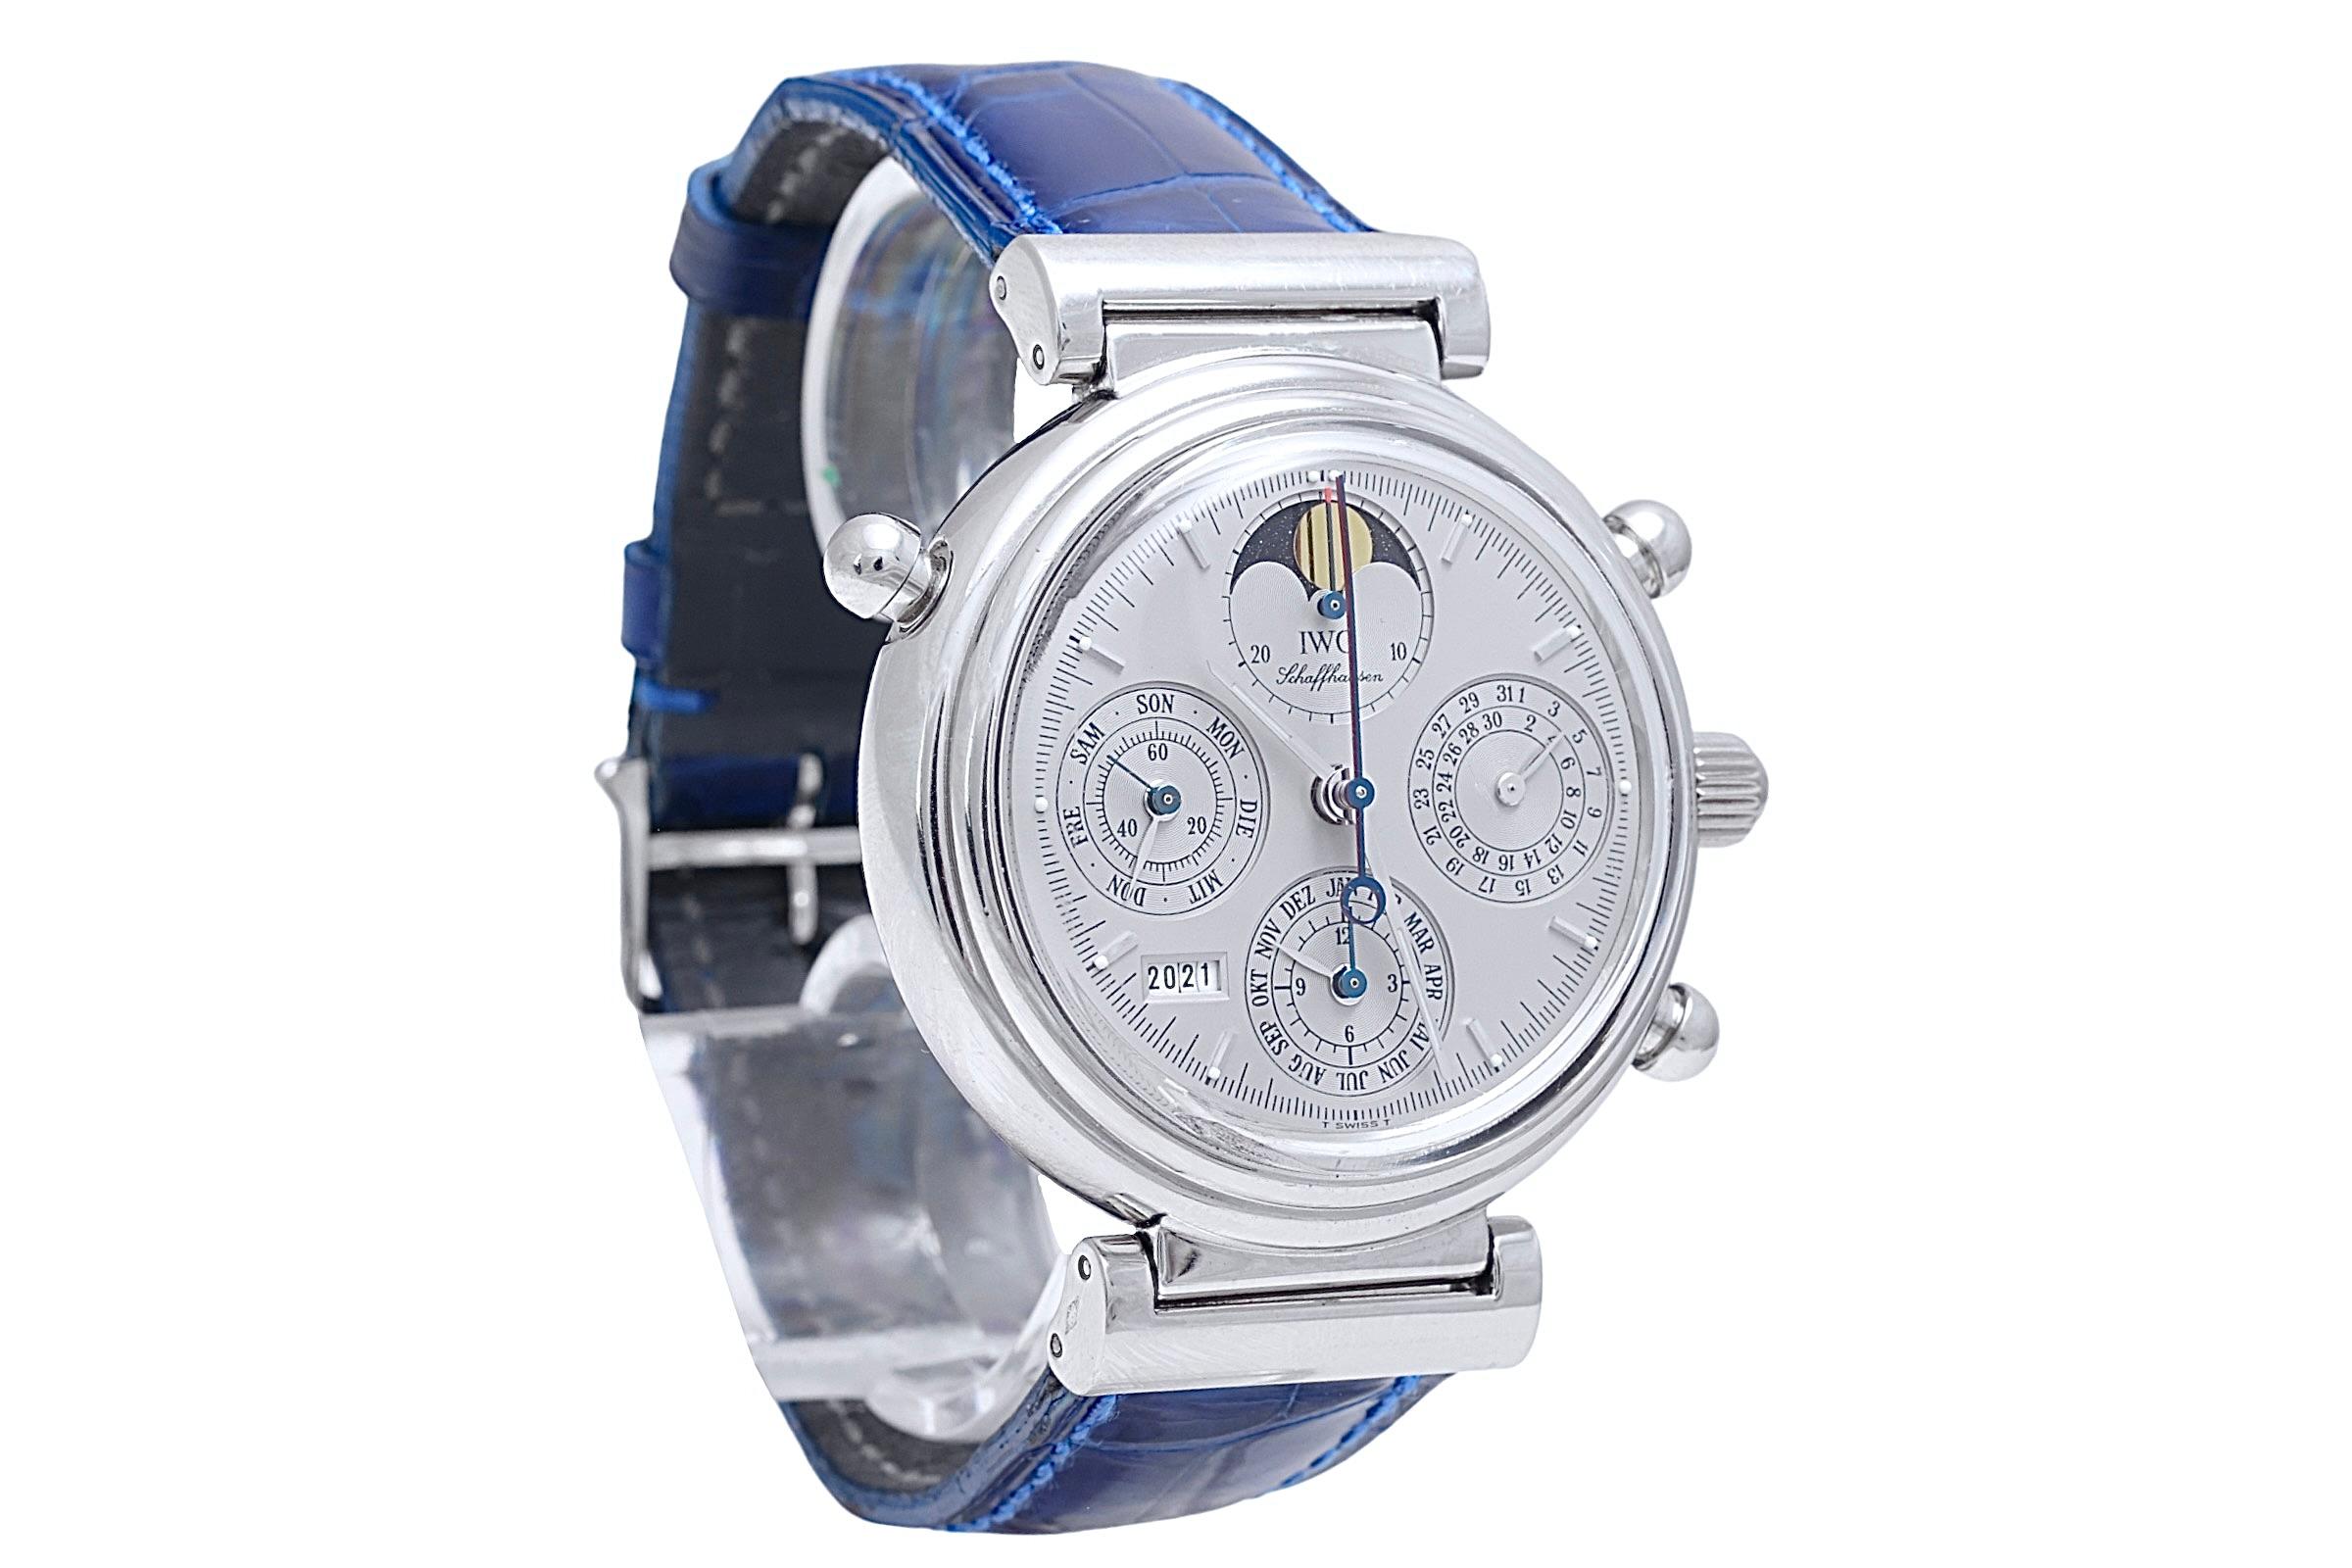 Platinum IWC Perpetual Calendar Split Second Chronograph Limited Wrist Watch3751 For Sale 2